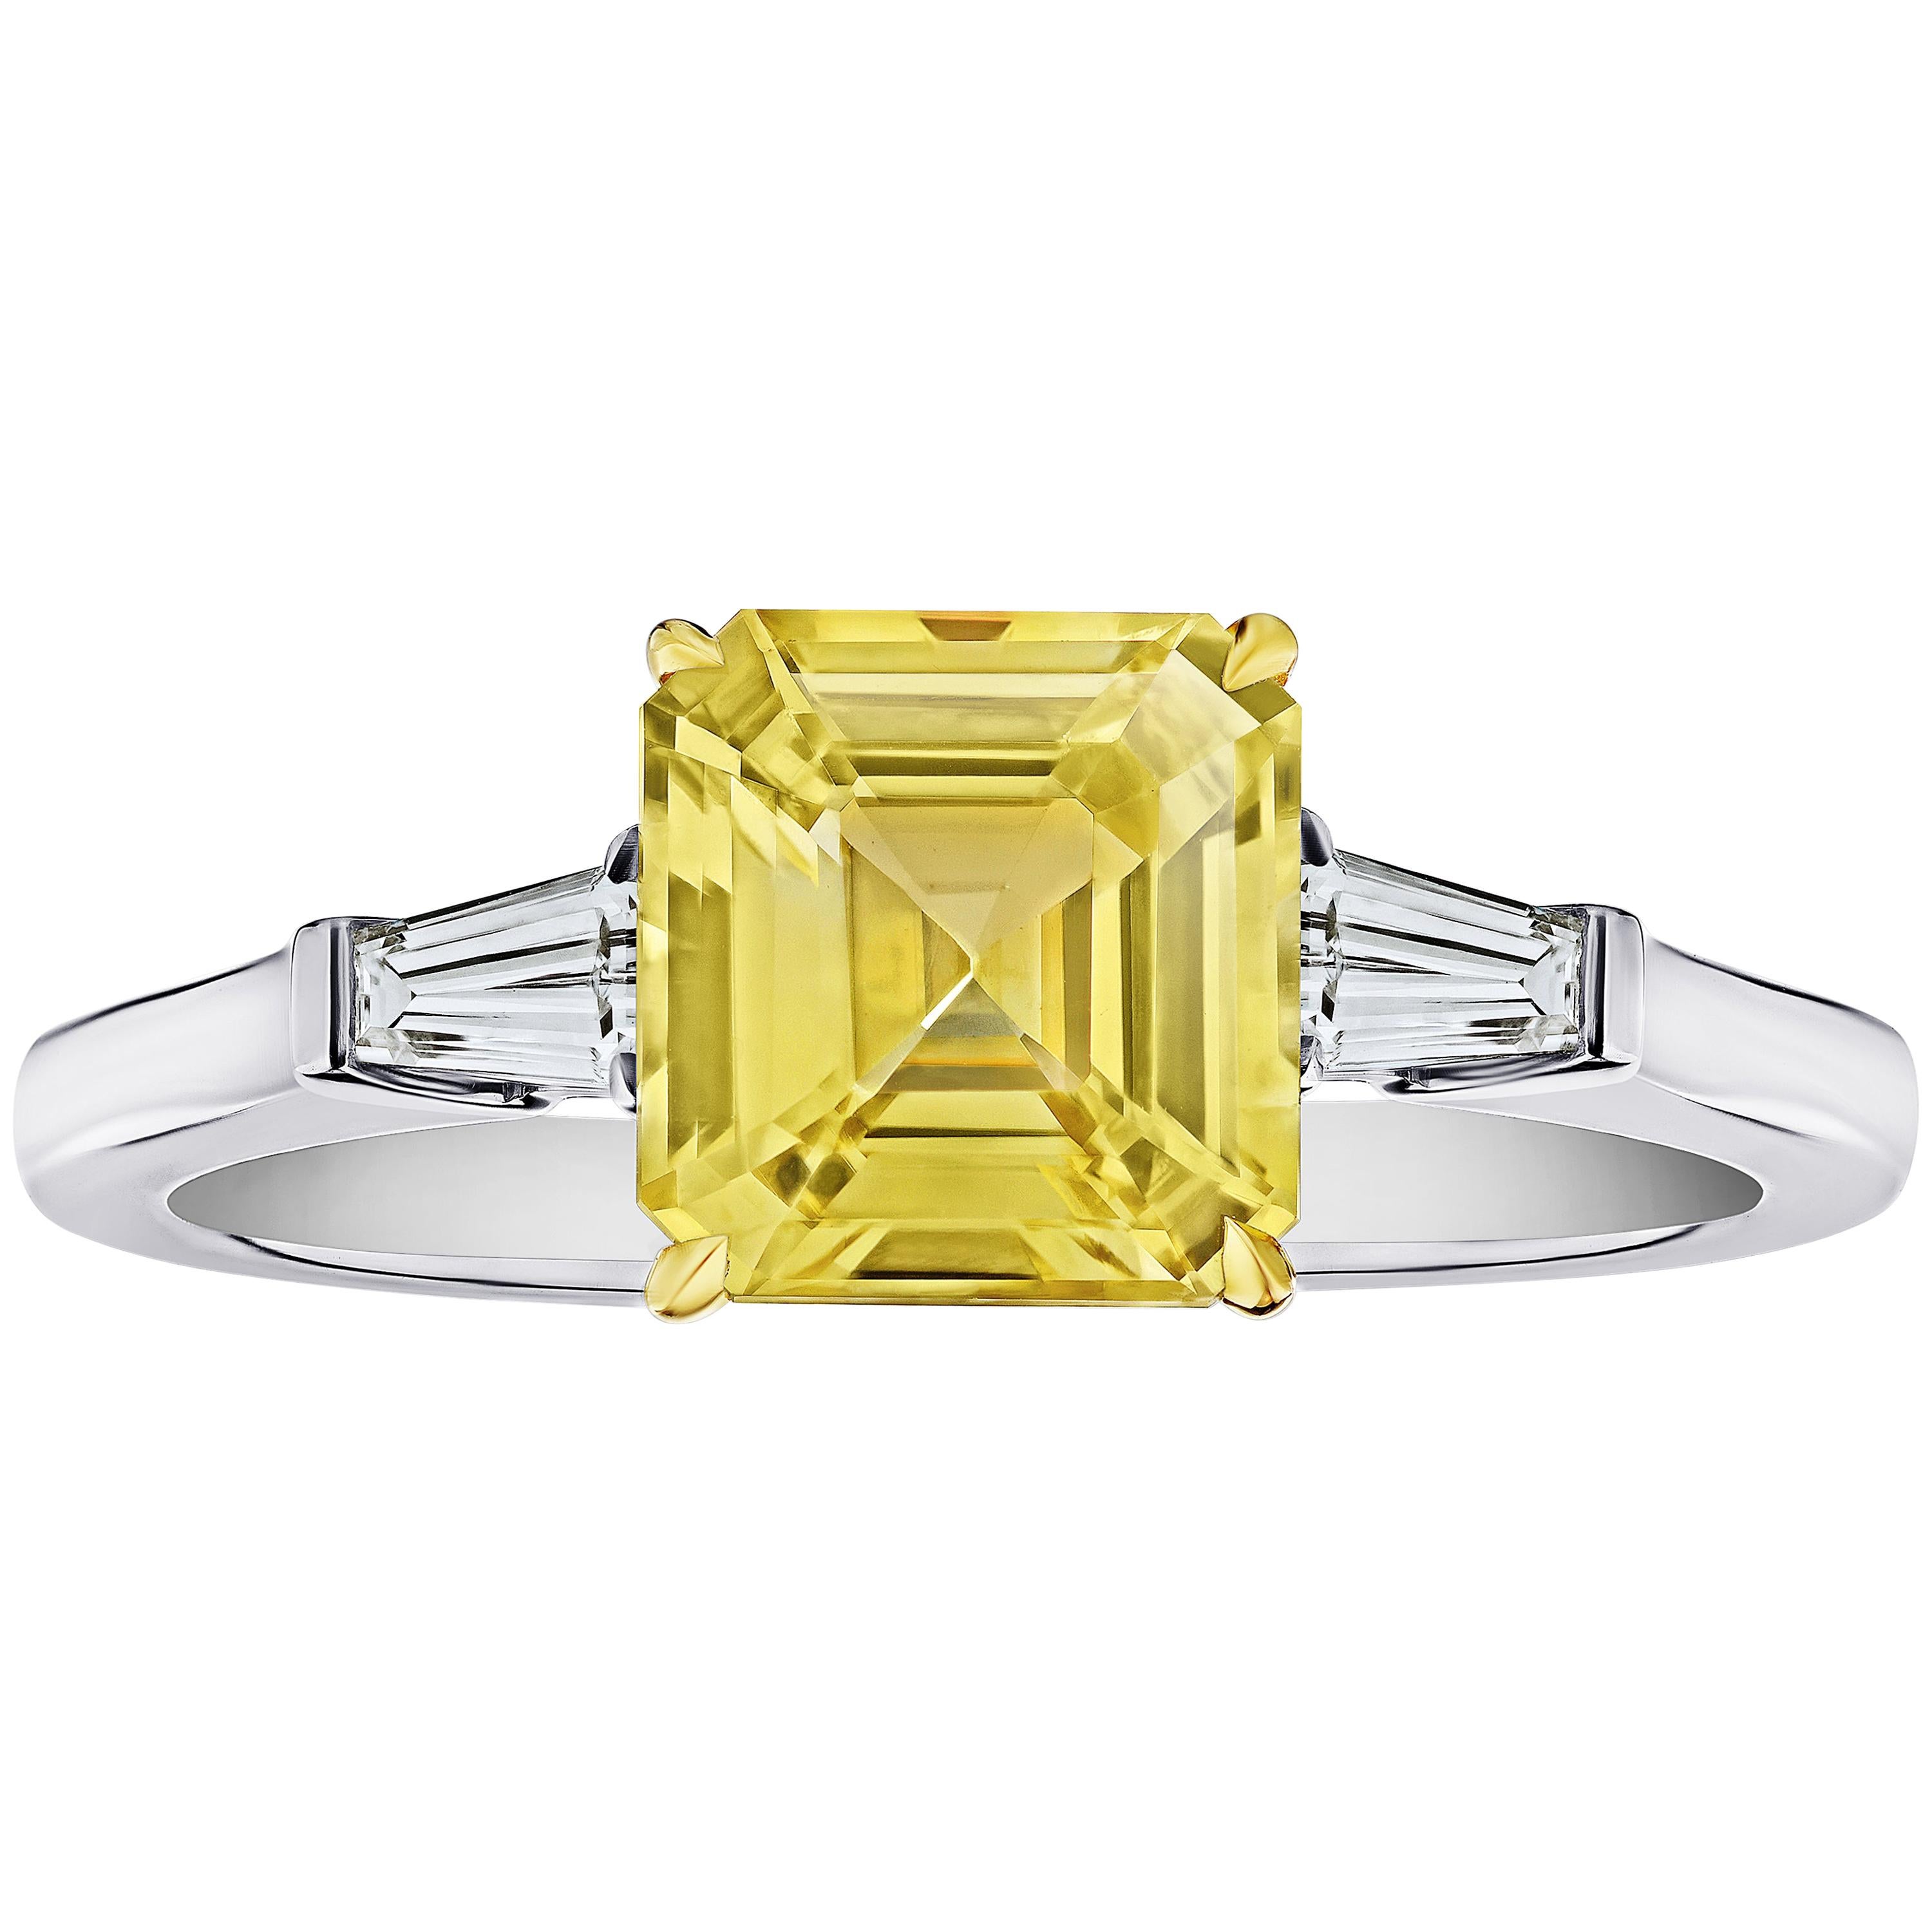 2.52 Carat Emerald Cut Yellow Sapphire and Diamond Ring